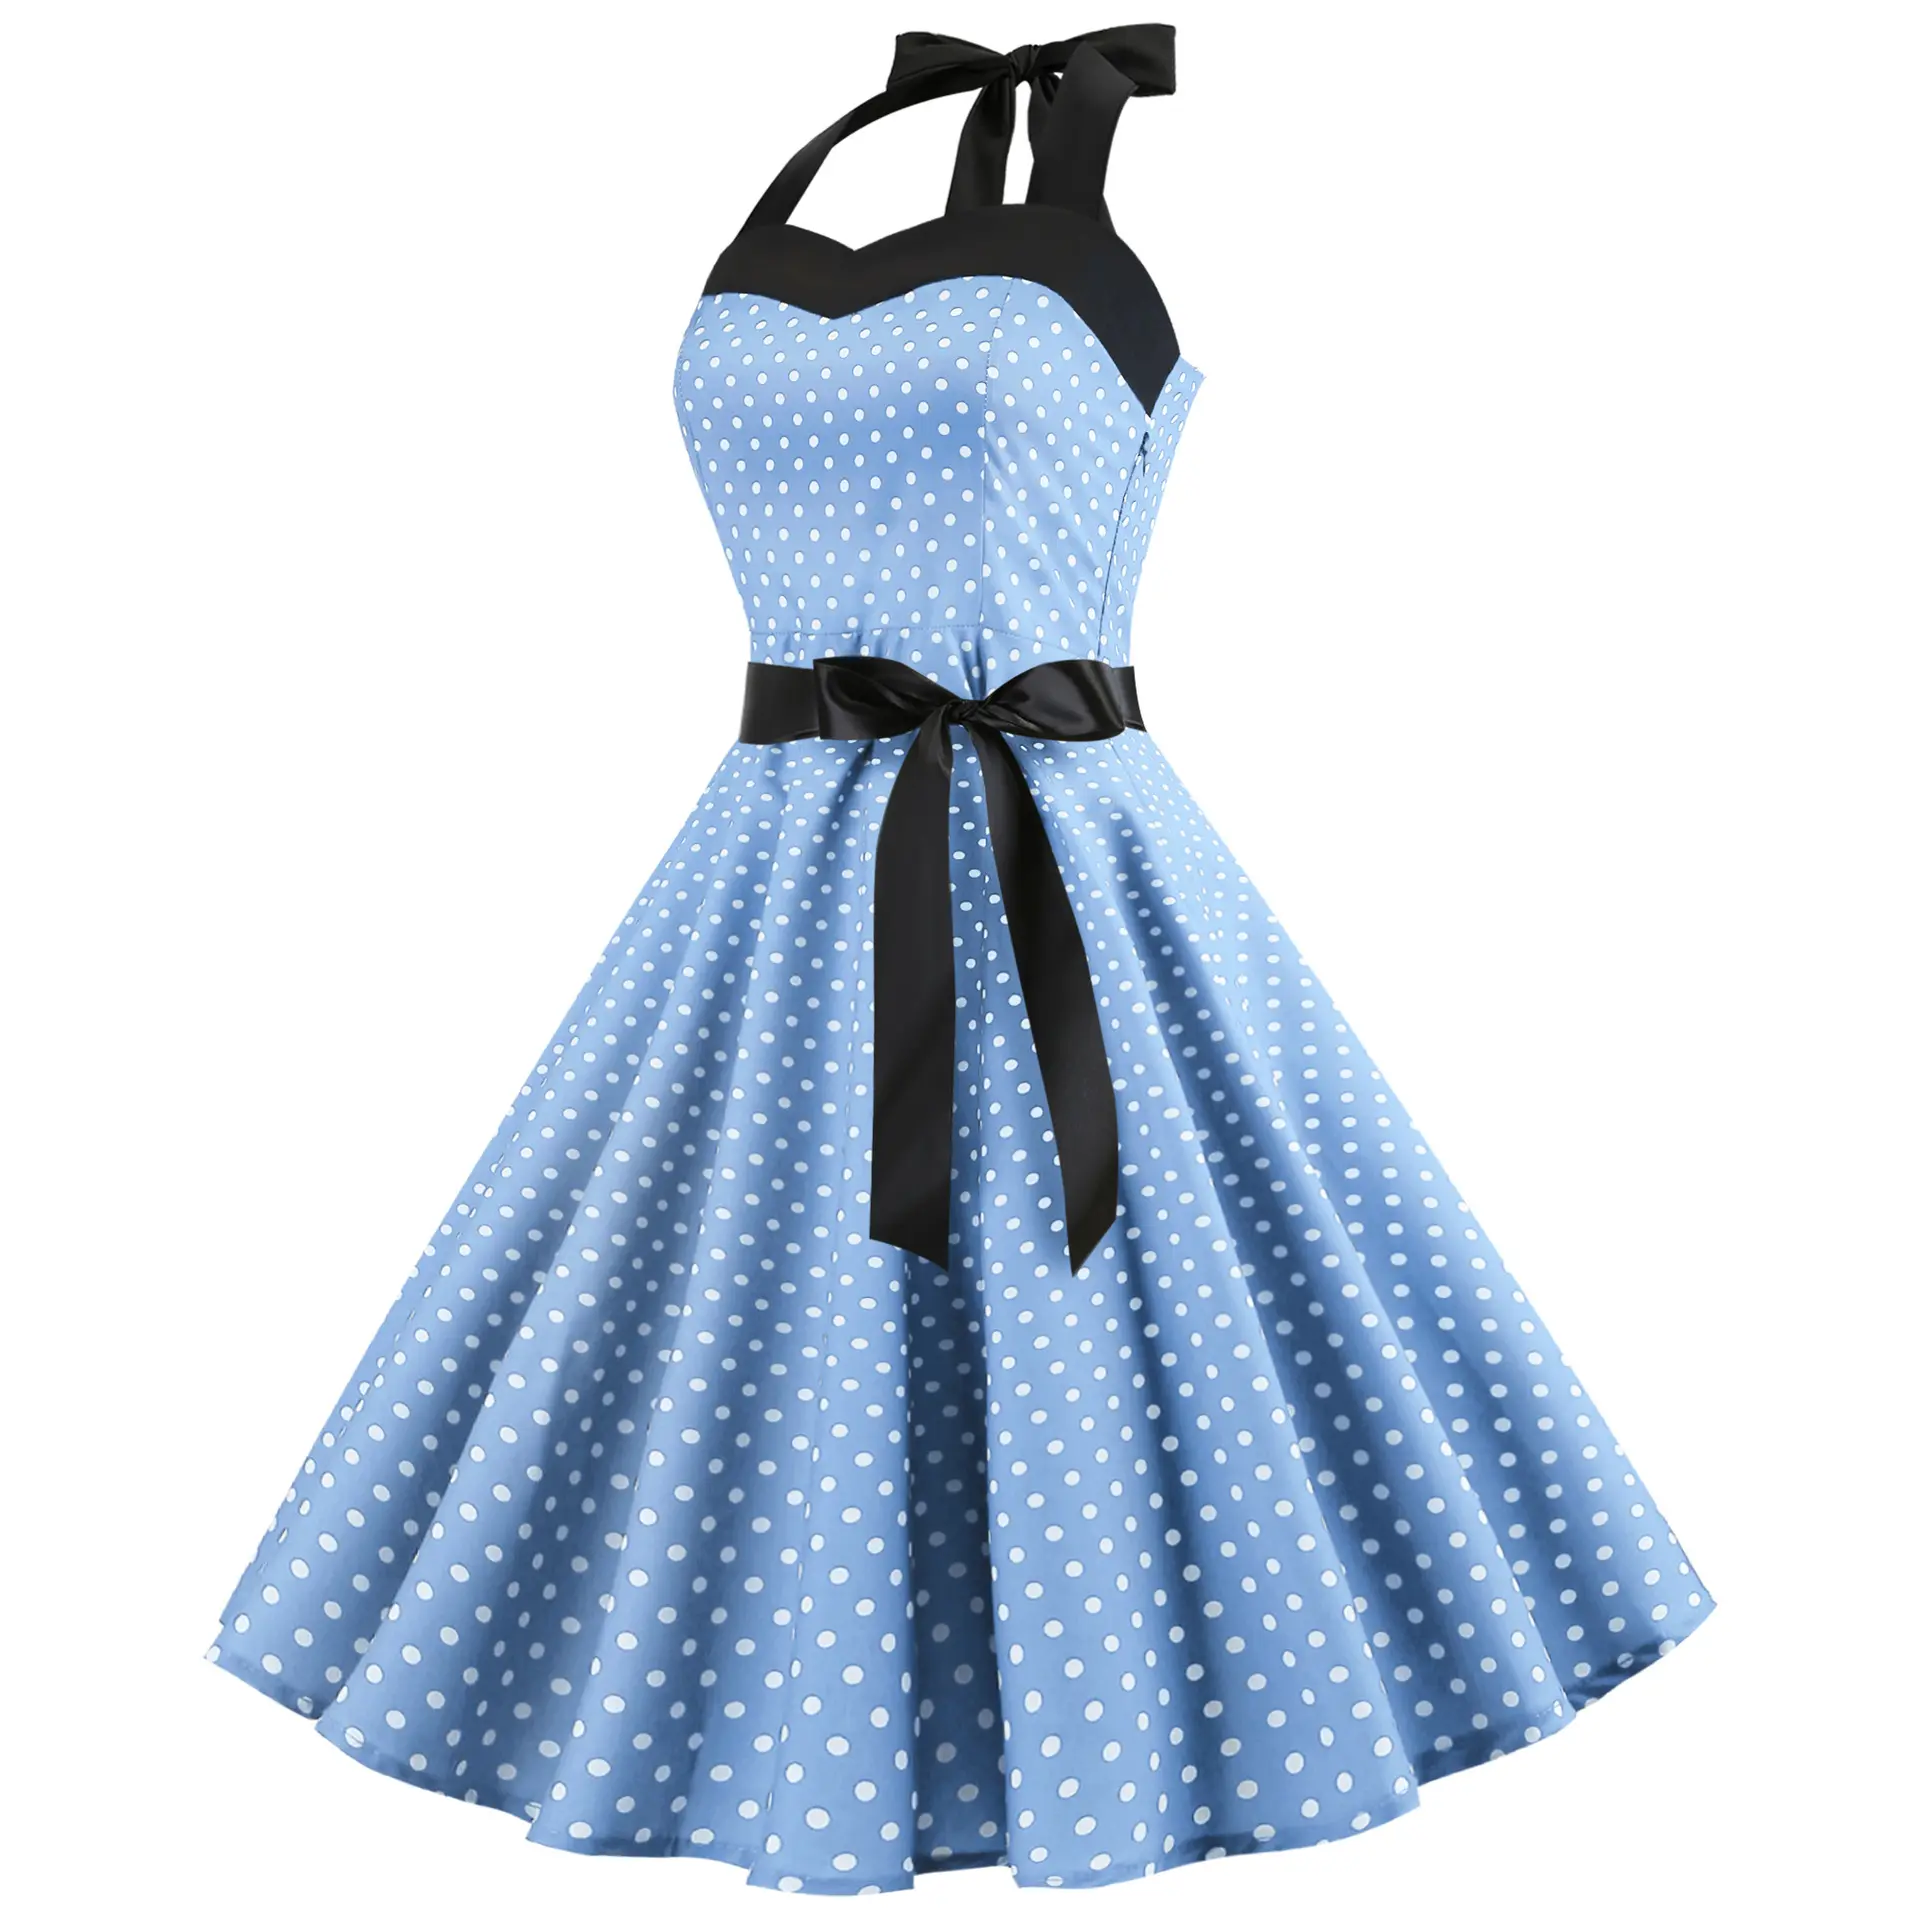 The new polka dot strapless dress with a vintage hemline